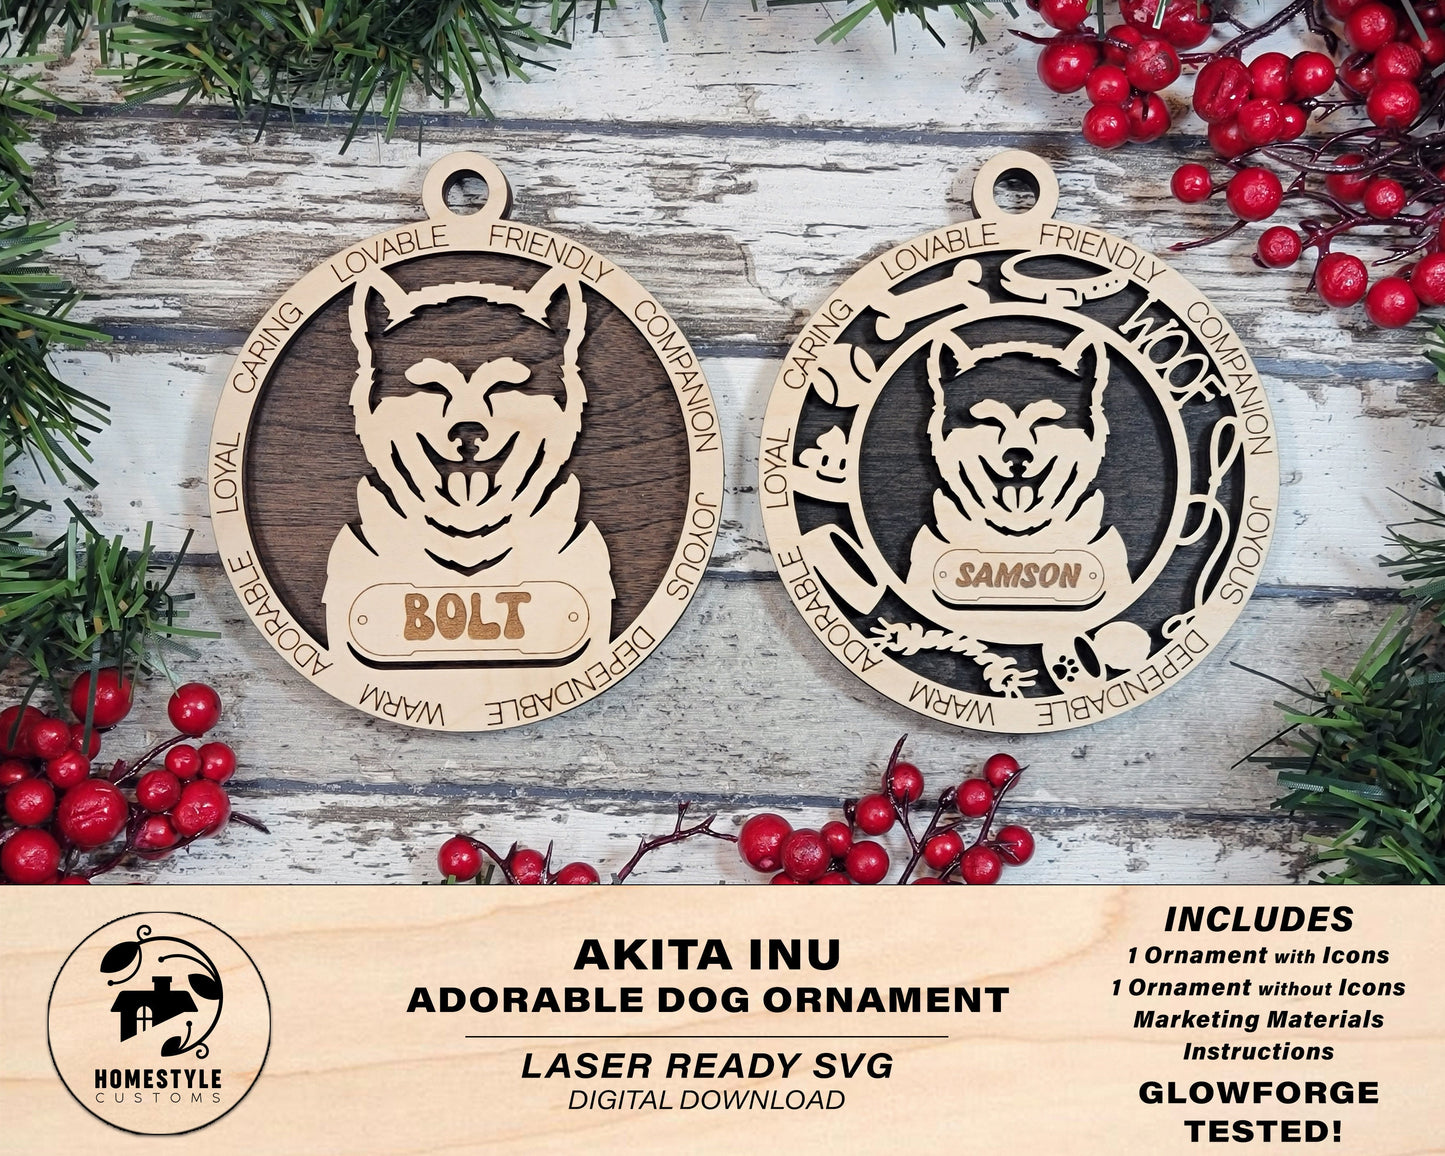 Akita Inu - Adorable Dog Ornaments - 2 Ornaments included - SVG, PDF, AI File Download - Sized for Glowforge